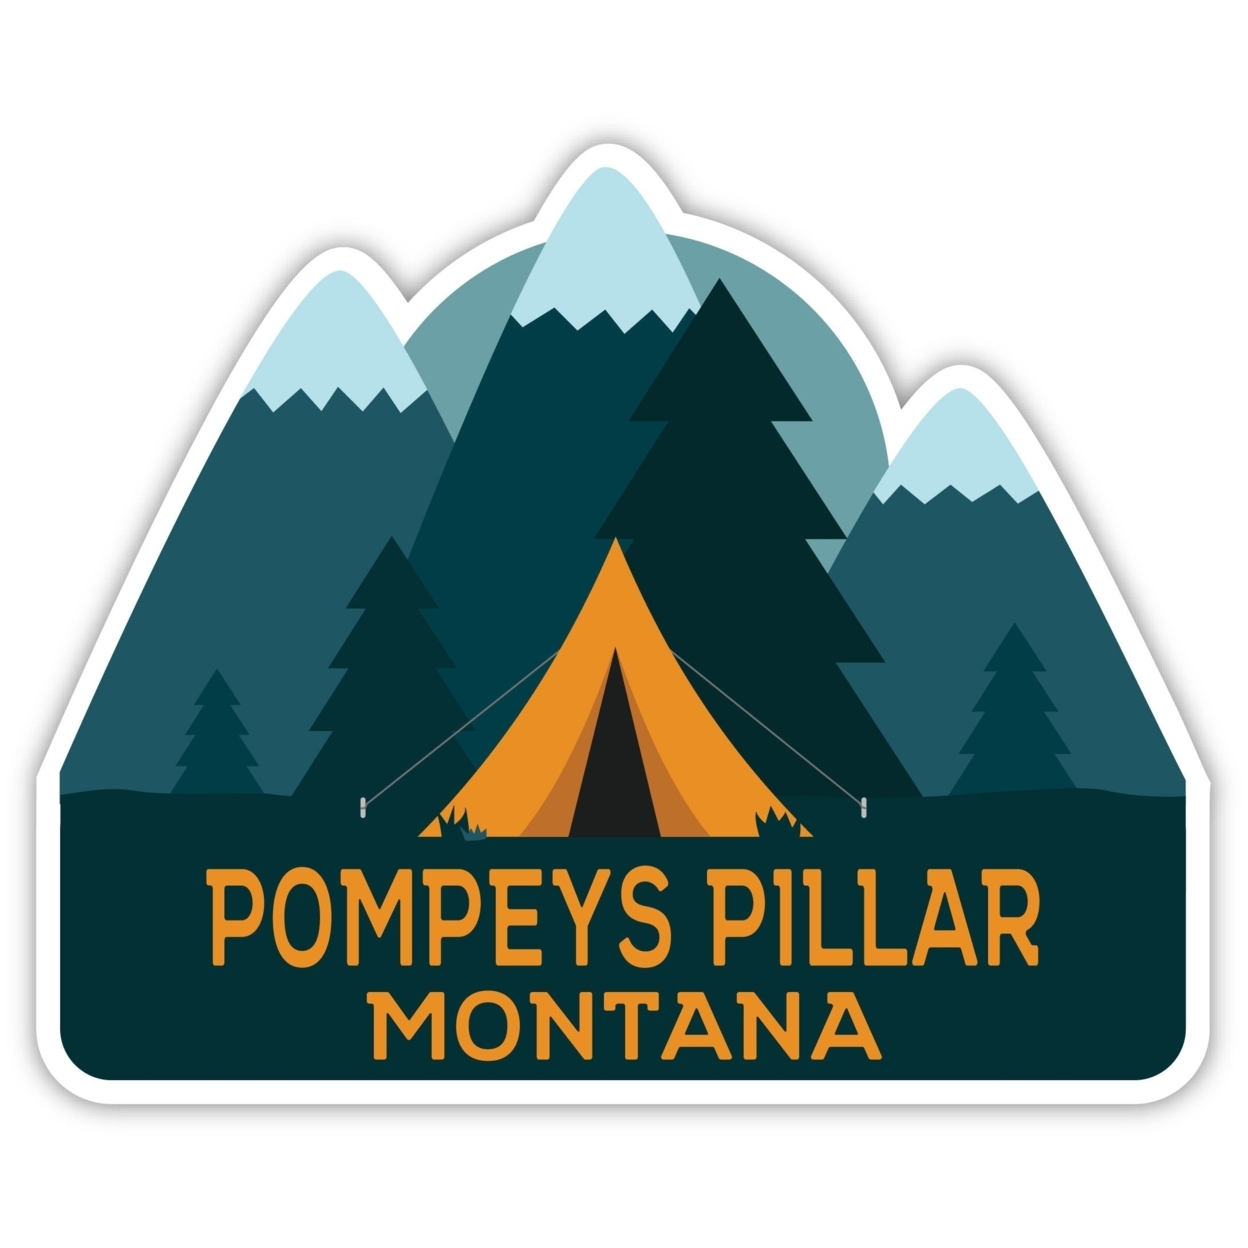 Pompeys Pillar Montana Souvenir Decorative Stickers (Choose Theme And Size) - Single Unit, 2-Inch, Tent